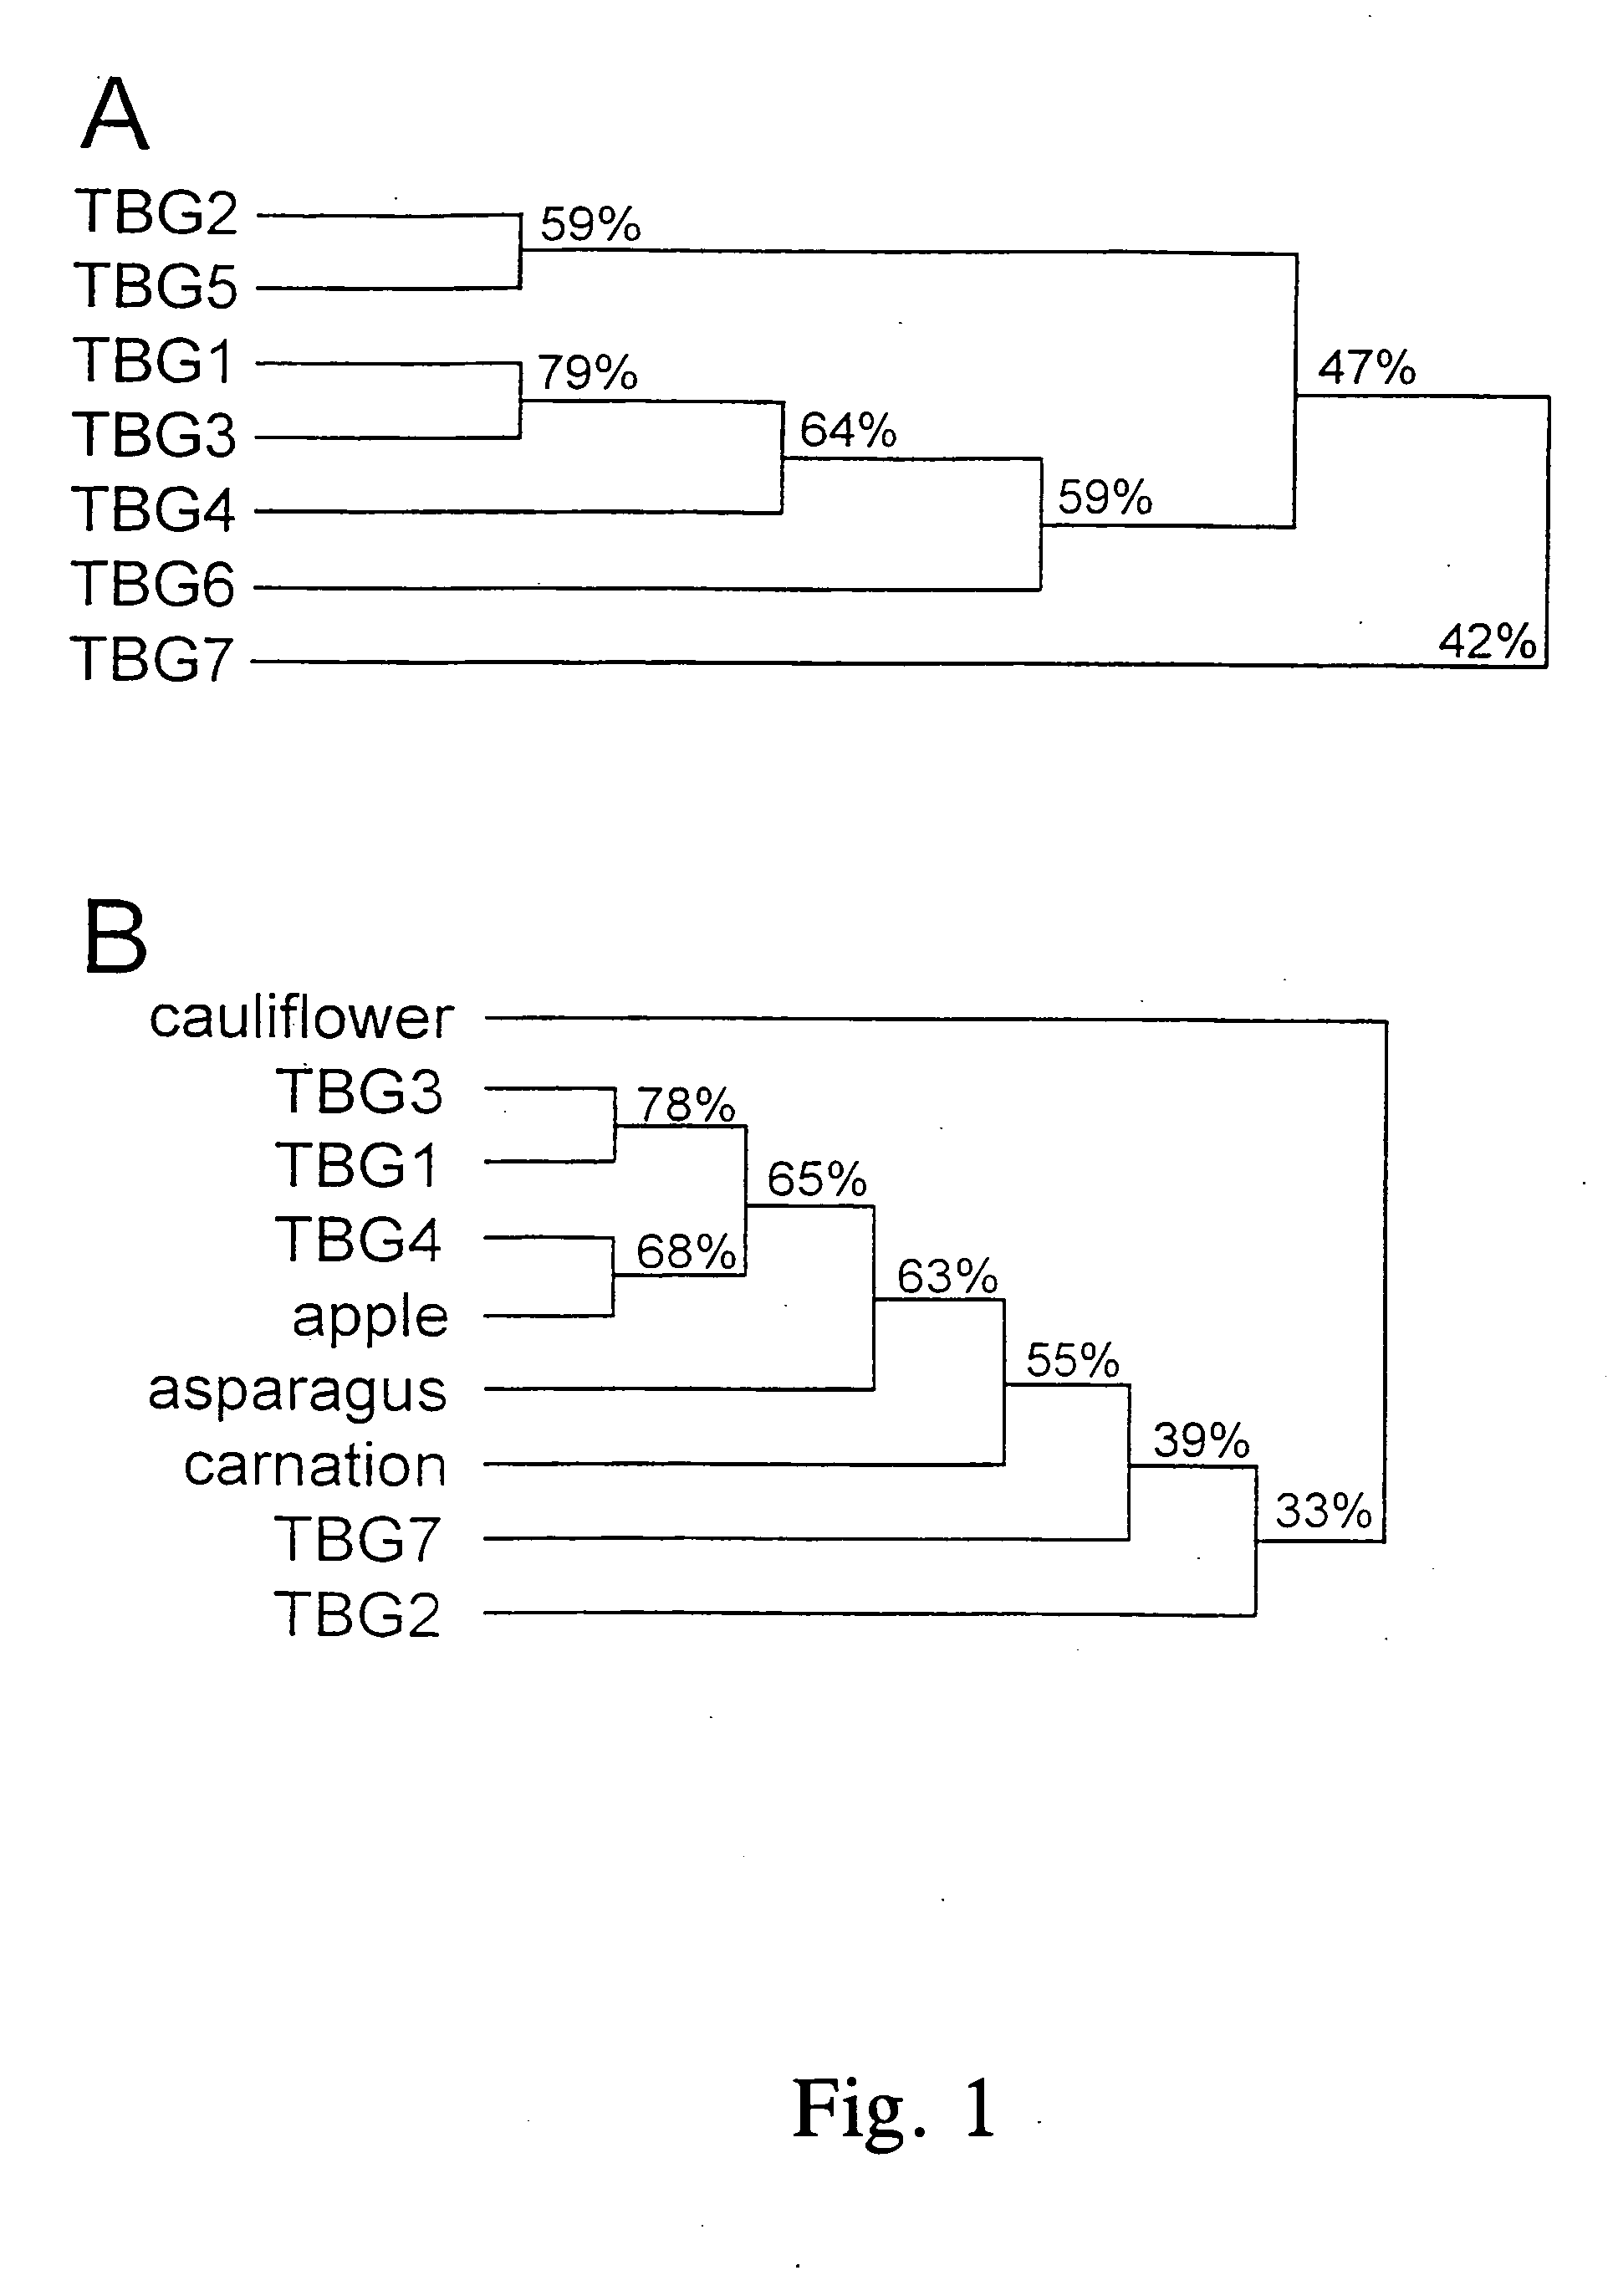 Genes coding for tomato beta-galactosidase polypeptides